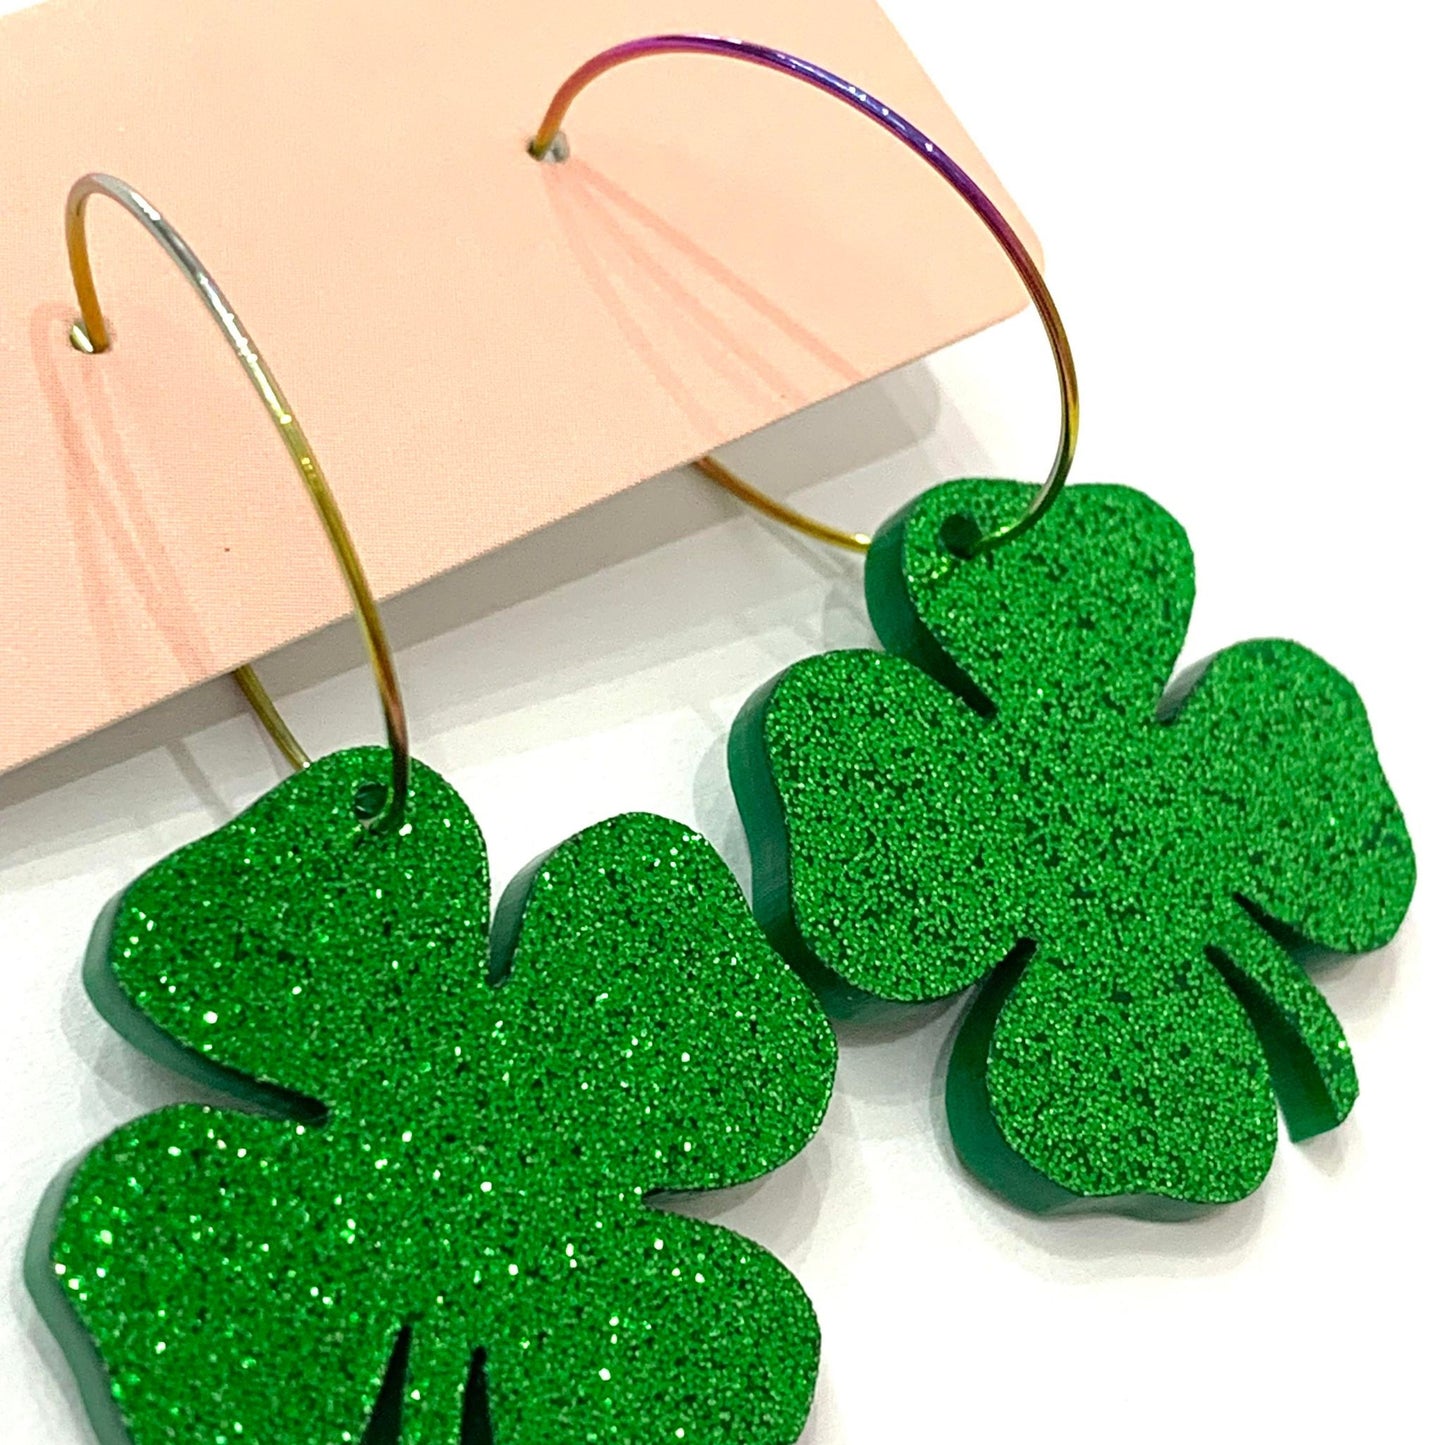 MAKIN' WHOOPEE - Small Irish Green Lucky Clover Hoop Dangle Earrings